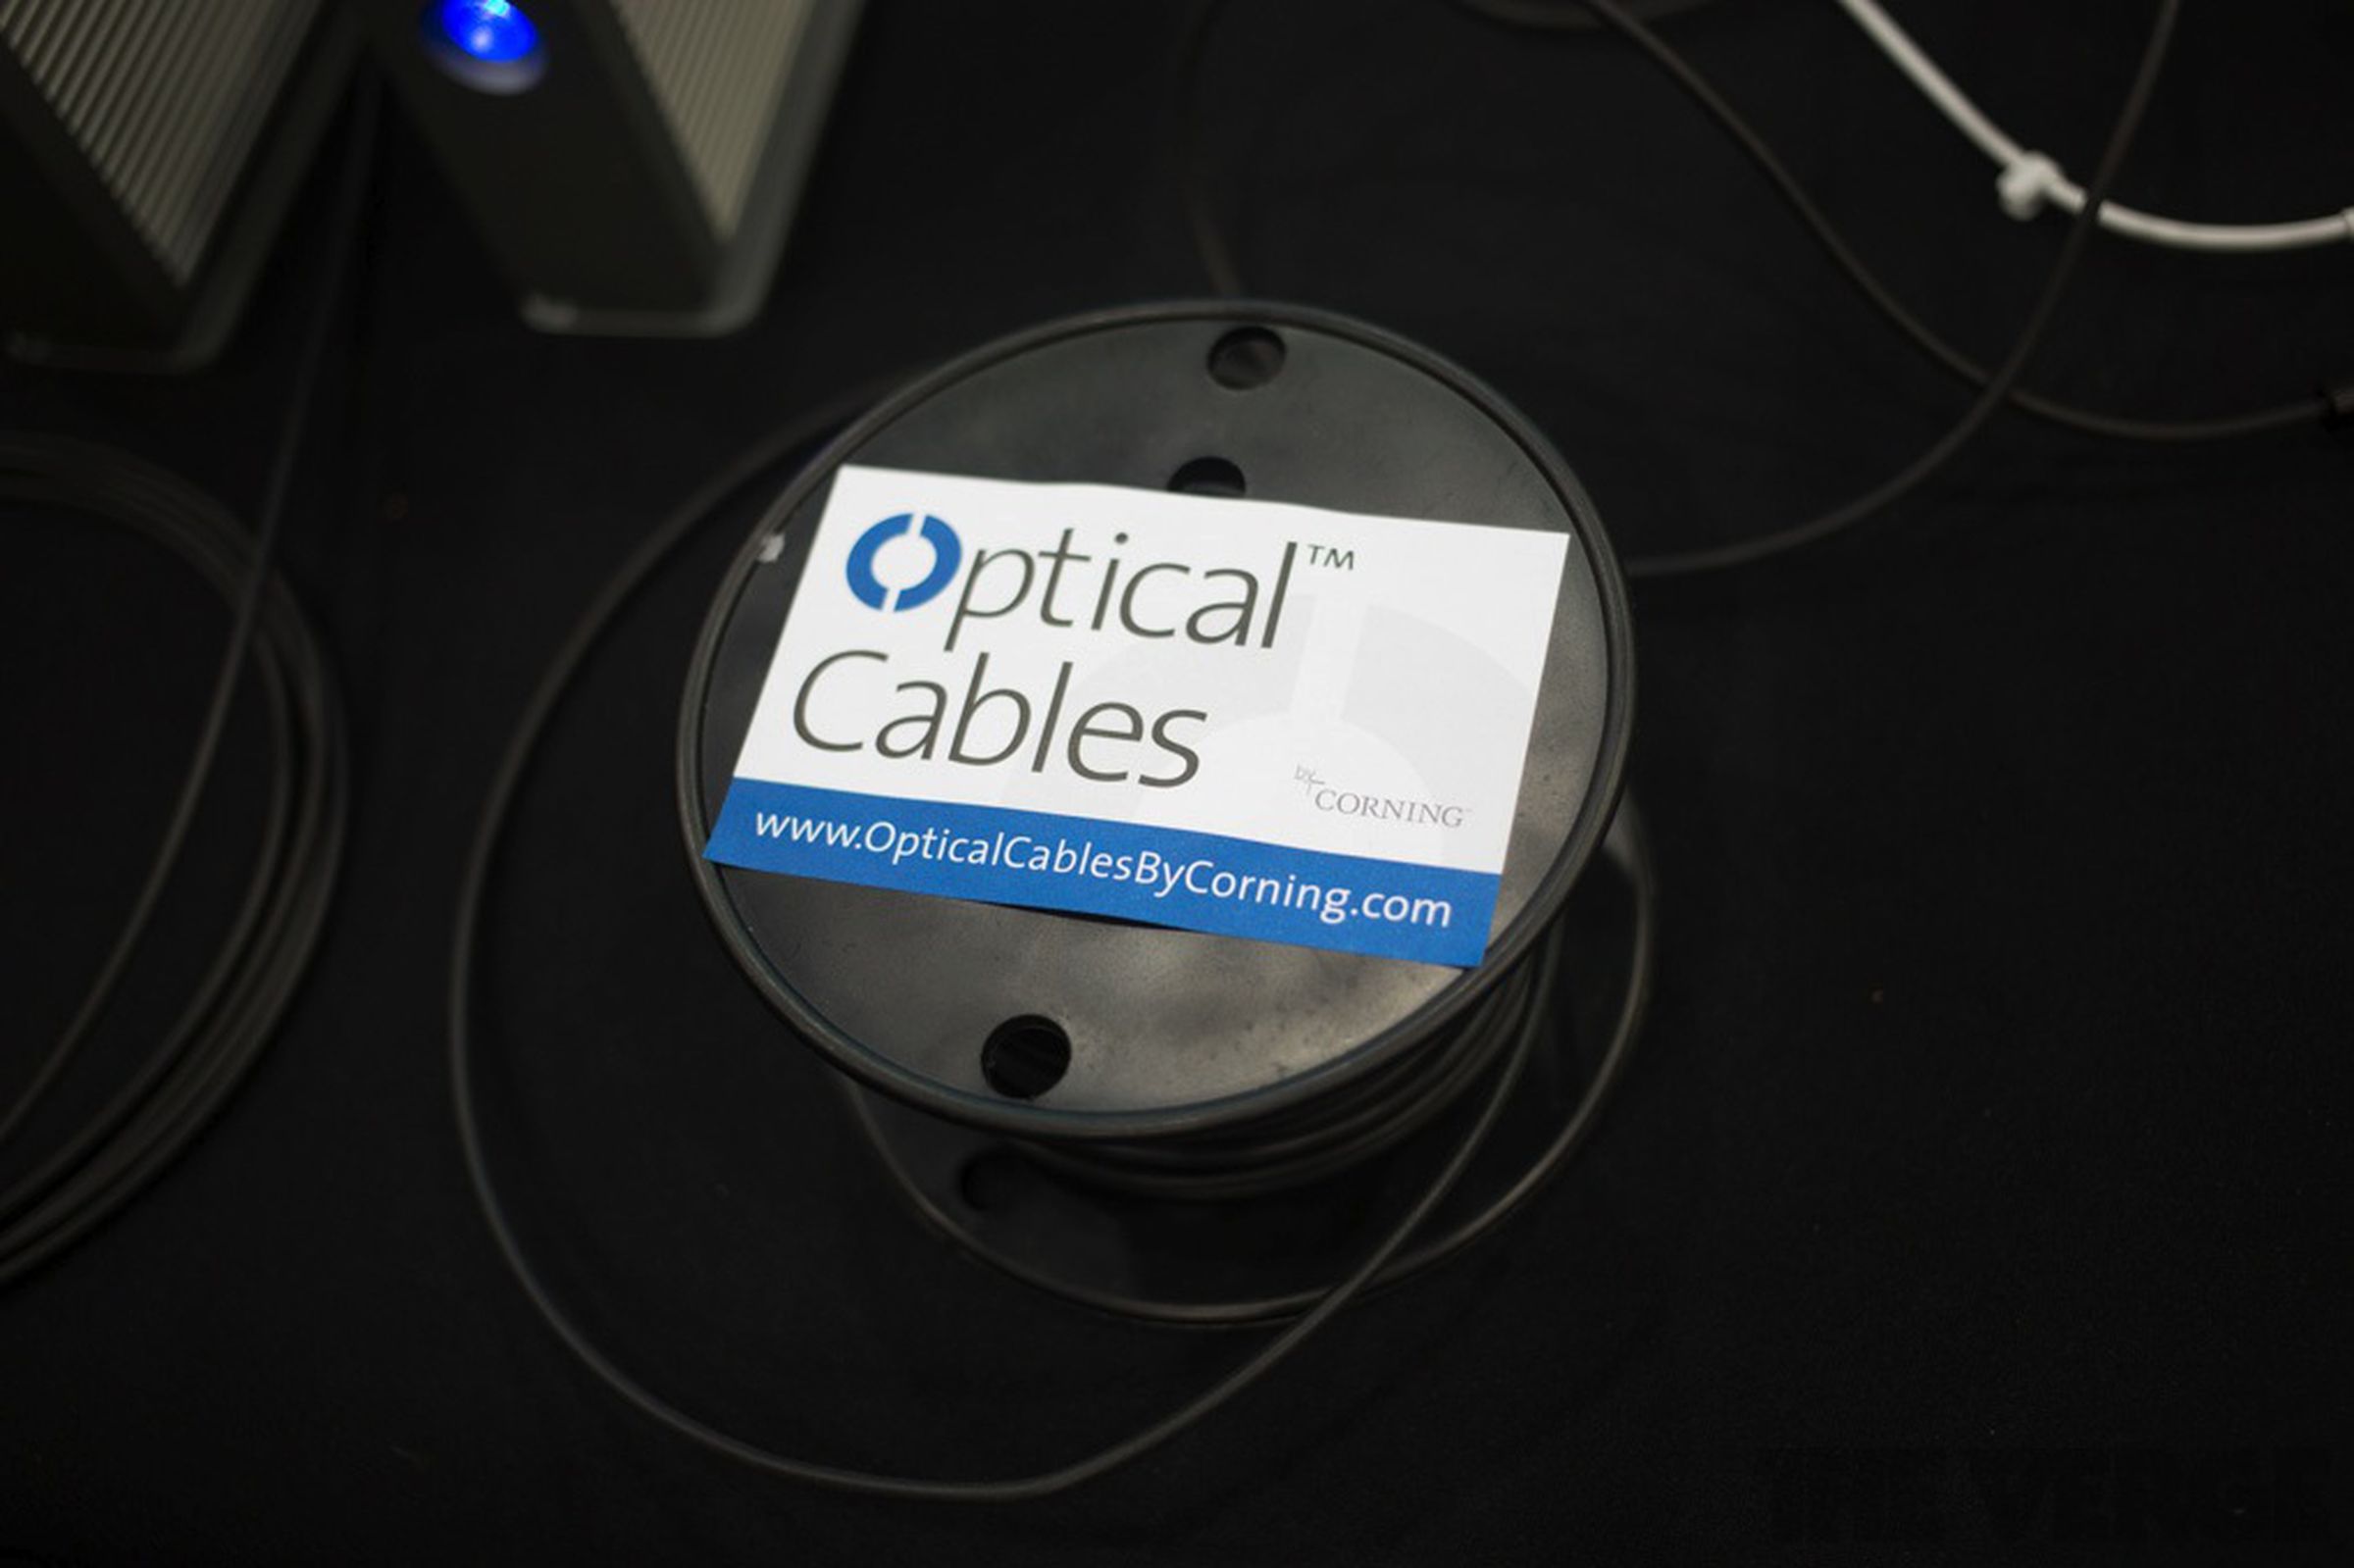 Corning optical Thunderbolt and USB cable photos